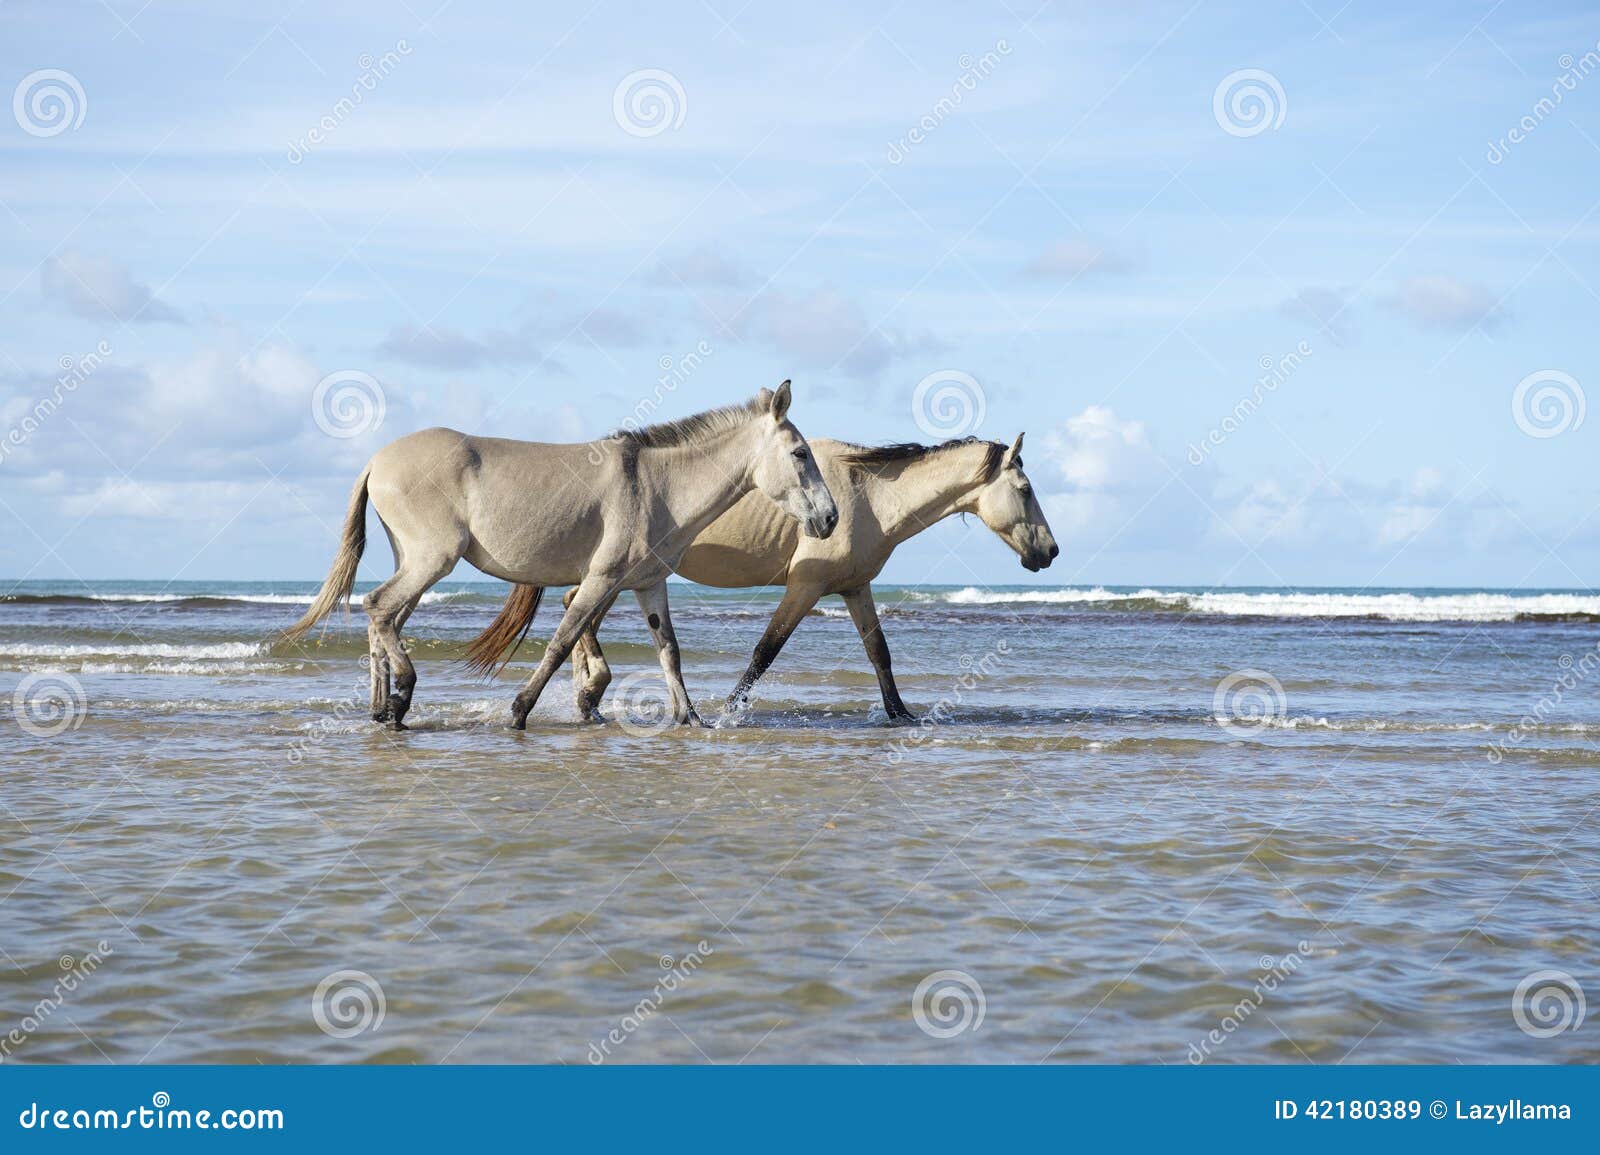 brazilian horses walking on beach in nordeste brazil